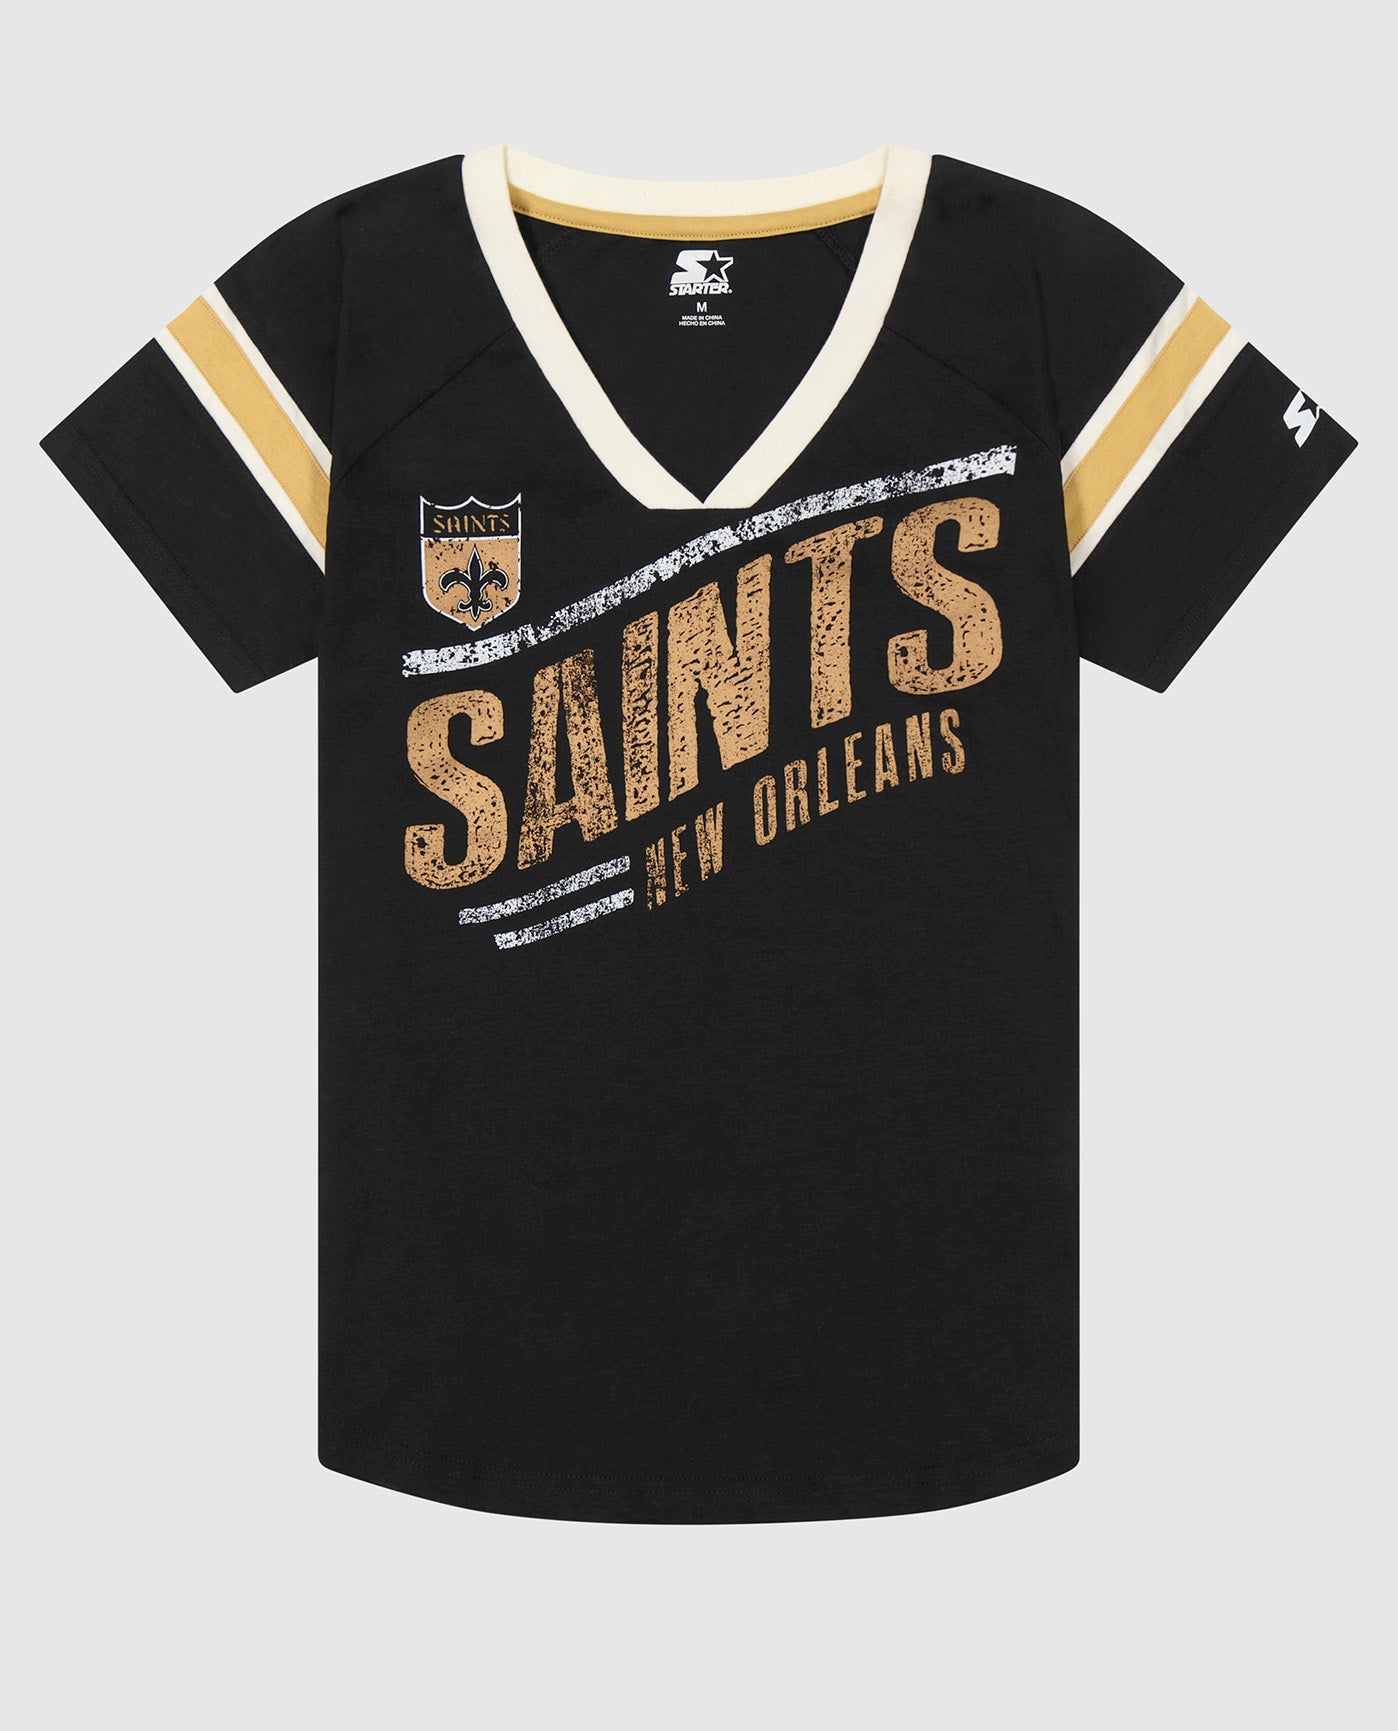 new orleans saints tee shirts